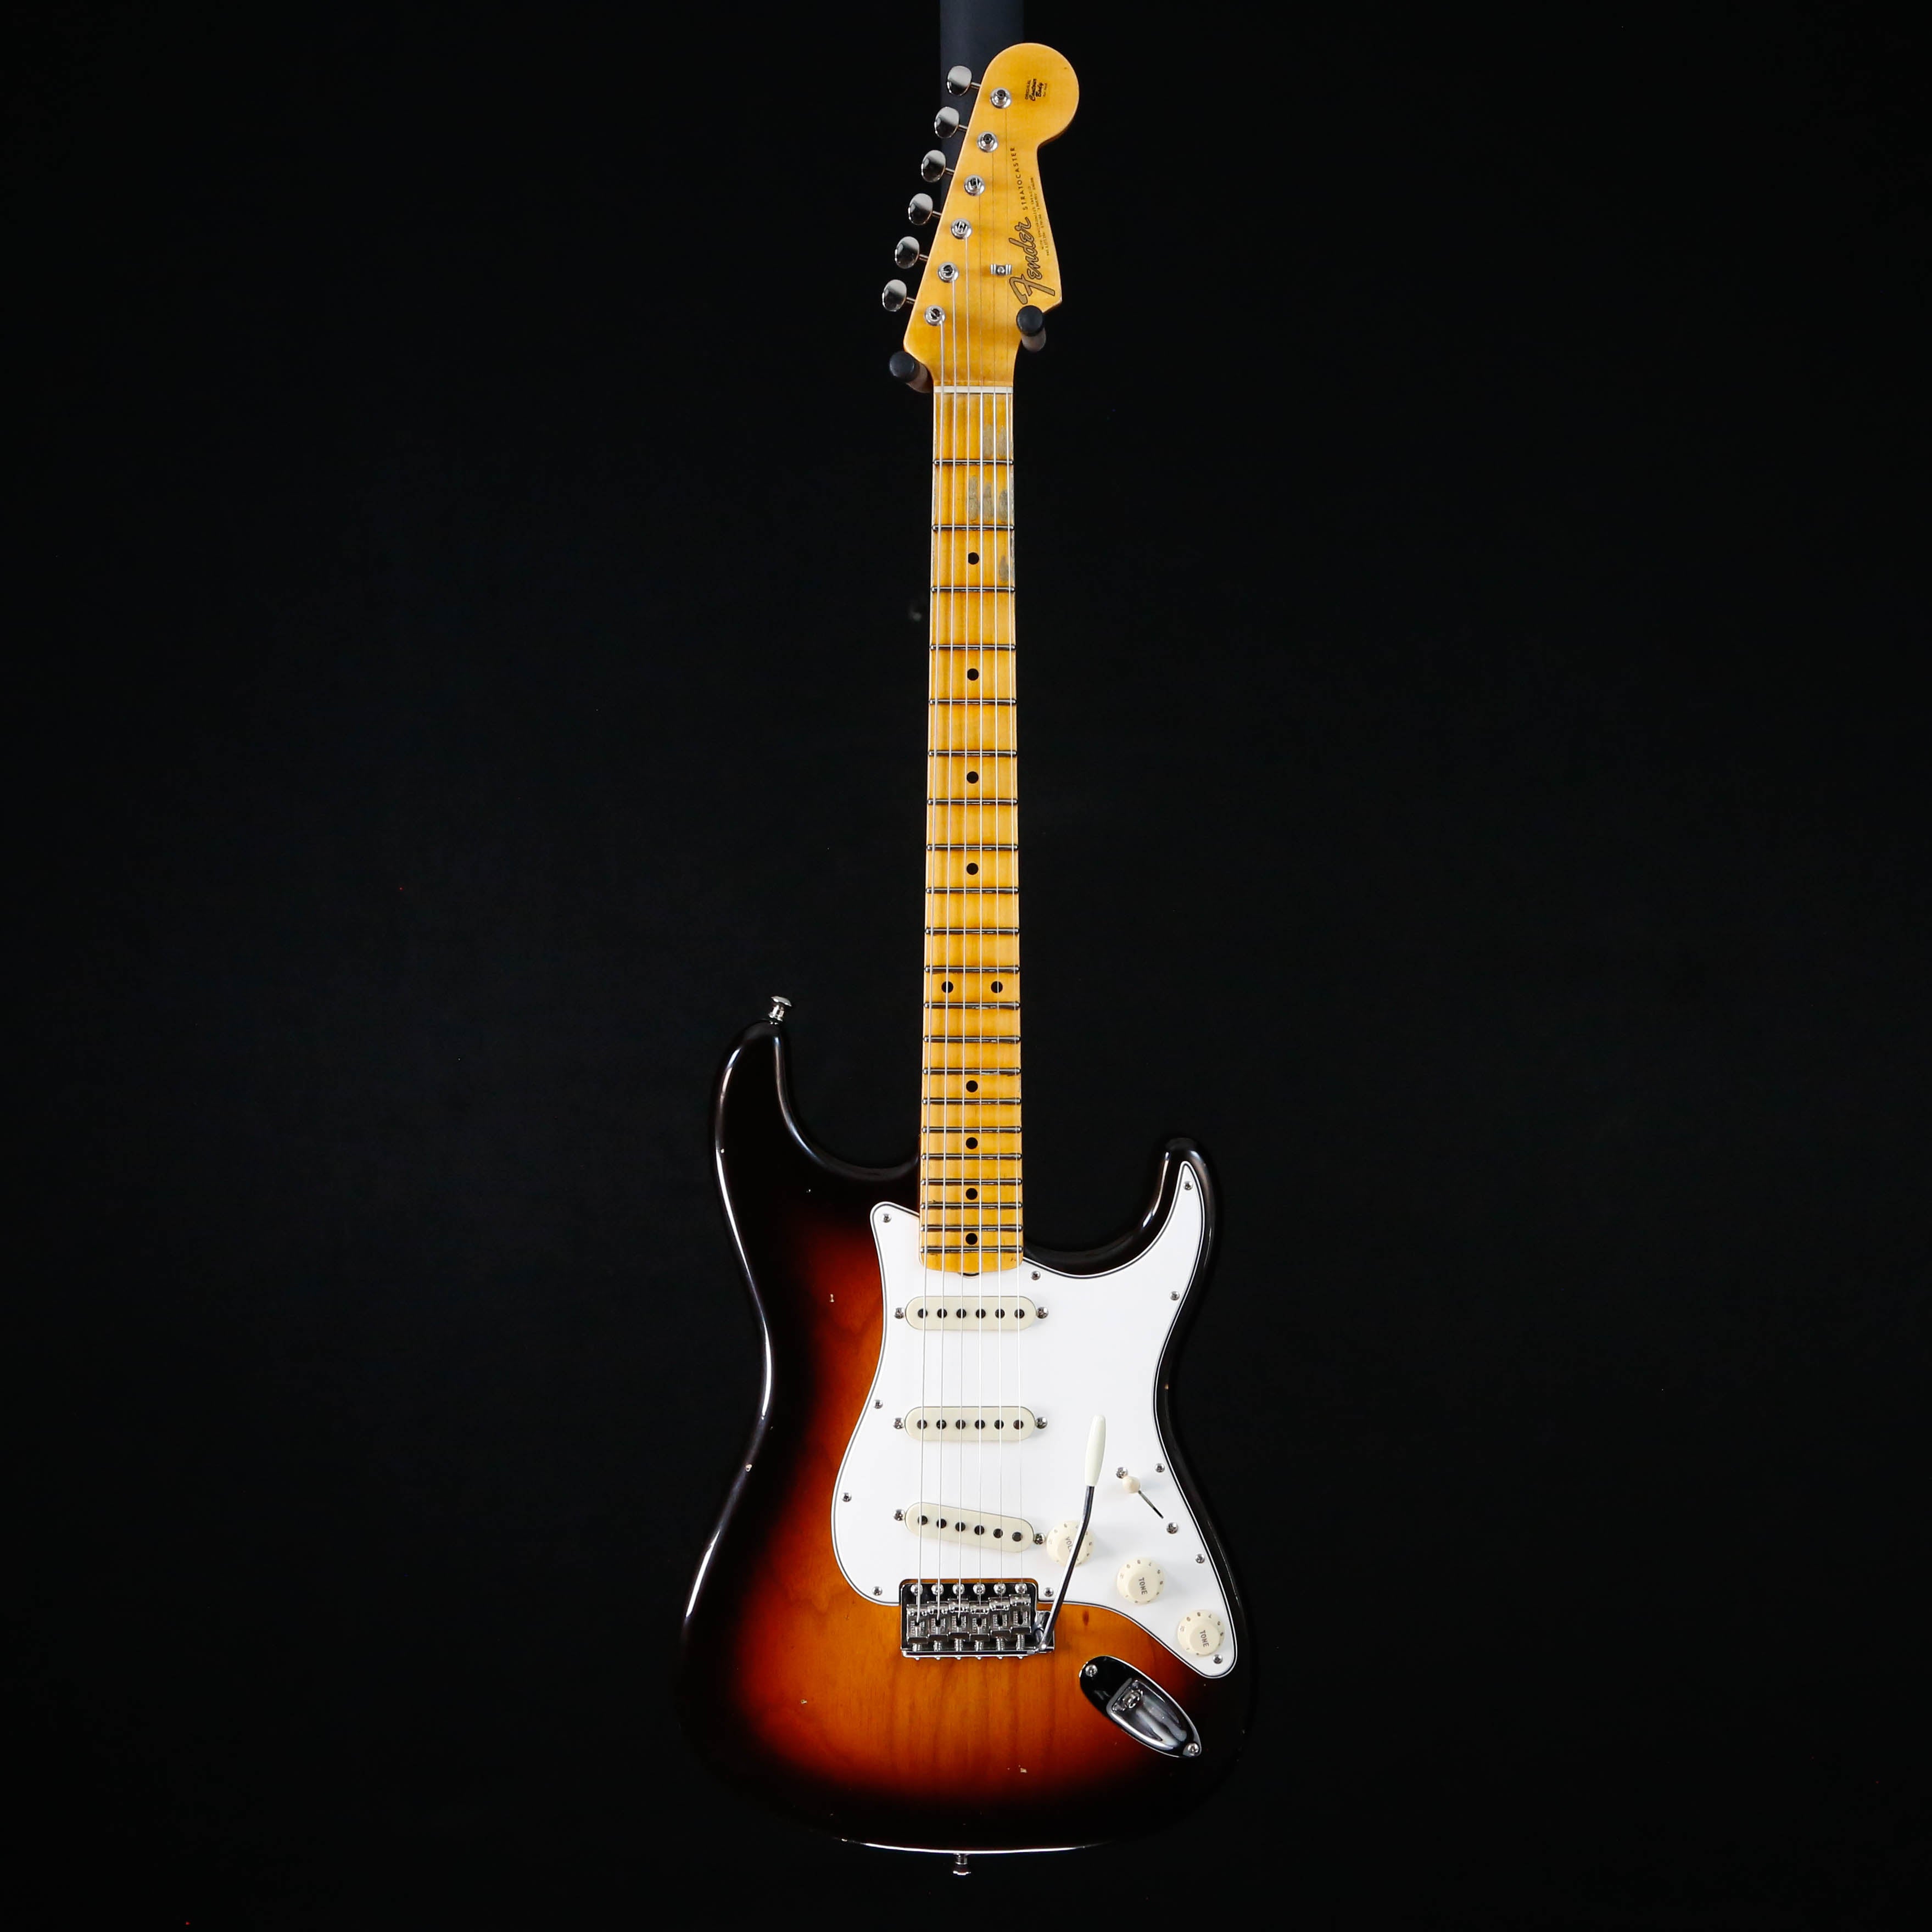 Fender Custom Shop Postmodern Stratocaster Journeyman Sunburst 806 7lbs 7.6oz